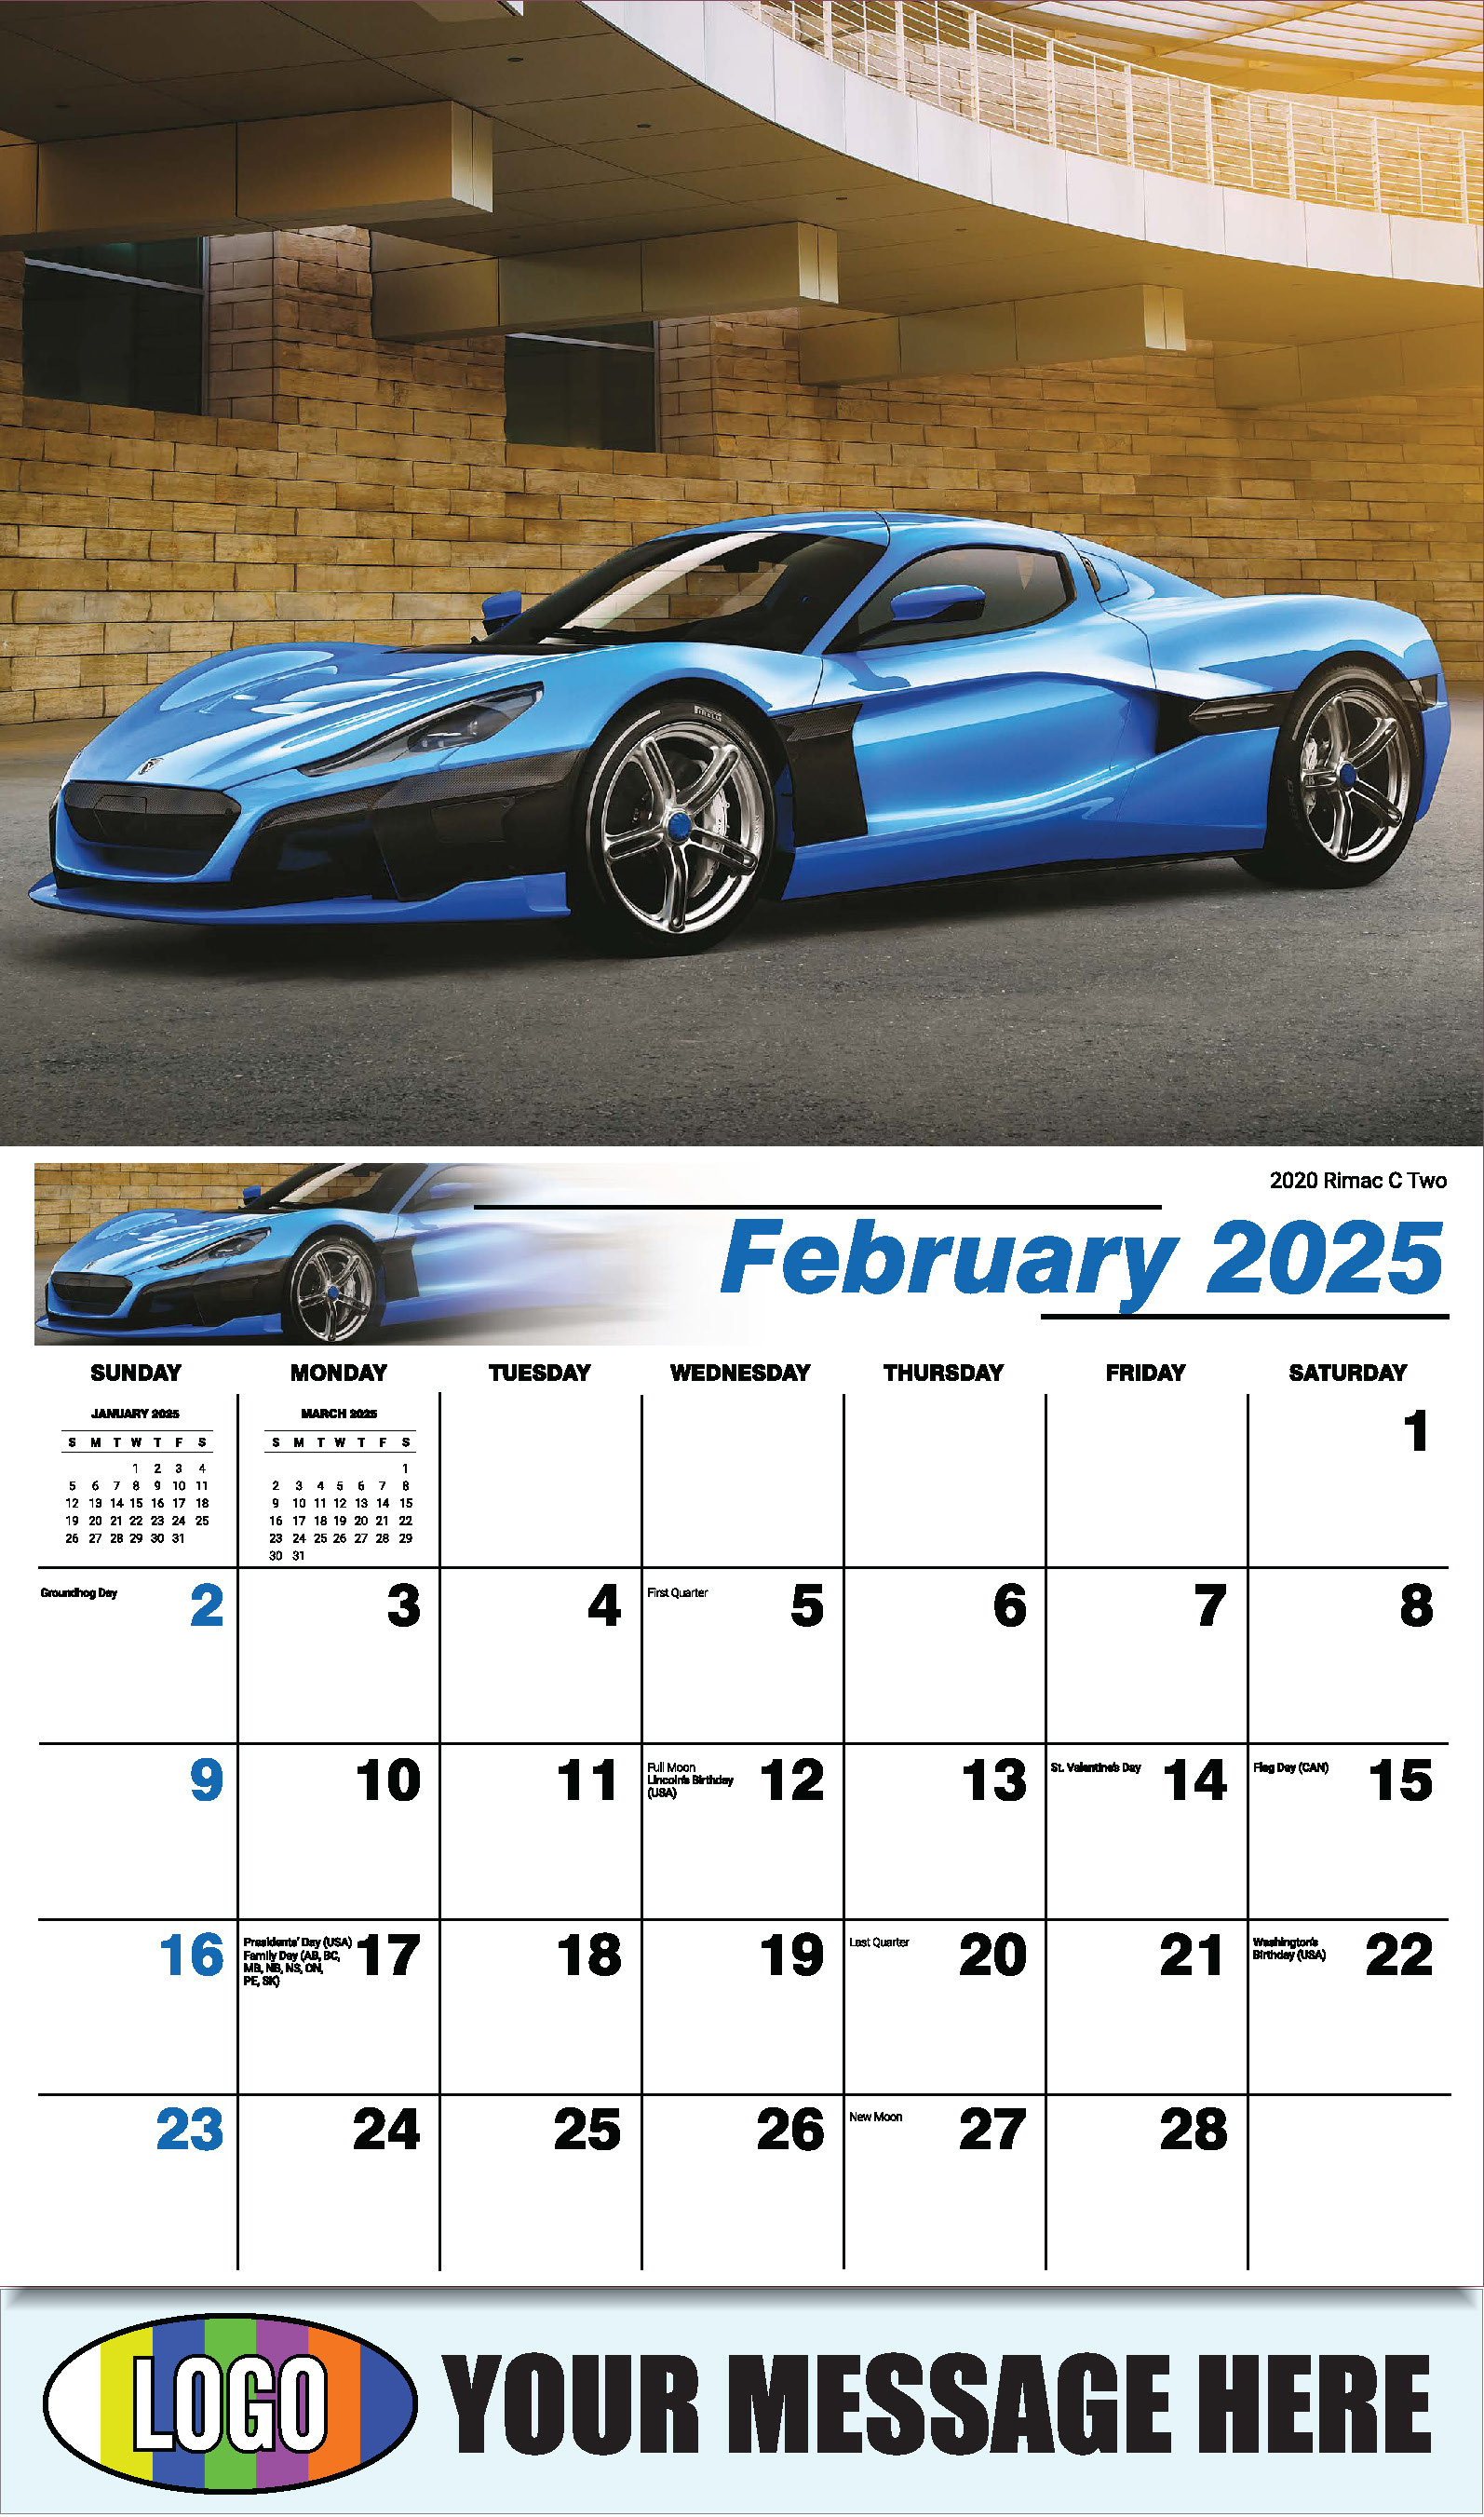 Exotic Cars 2025 Automotive Business Advertising Calendar - February